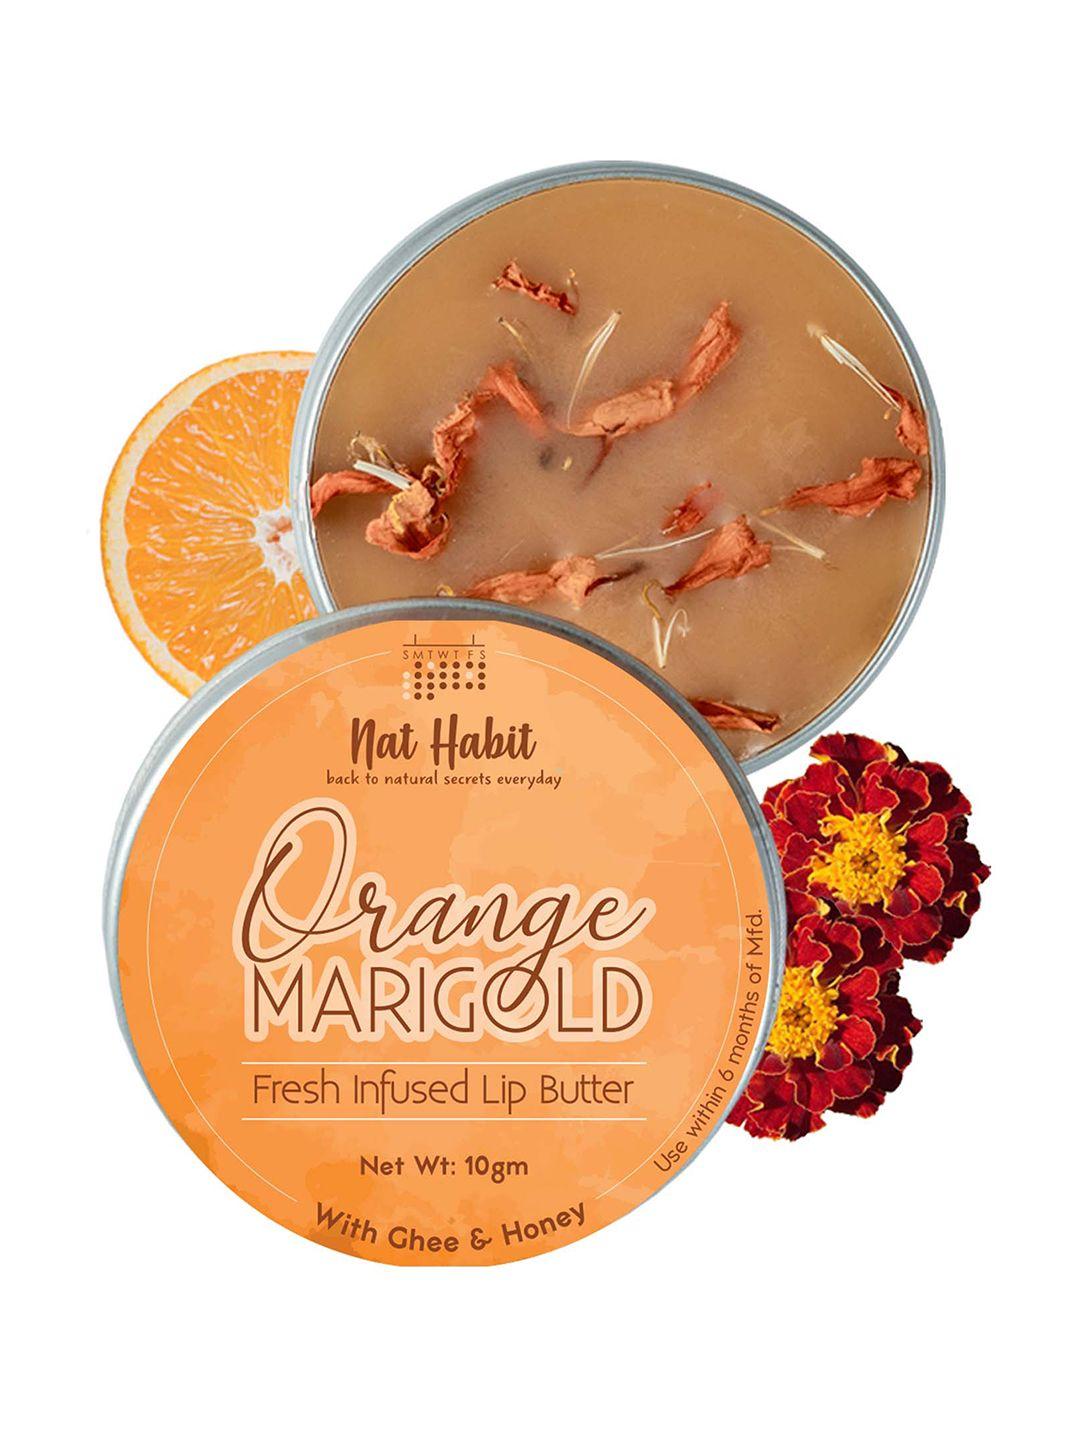 nat habit orange marigold fresh infused lip butter with ghee & honey - 10g